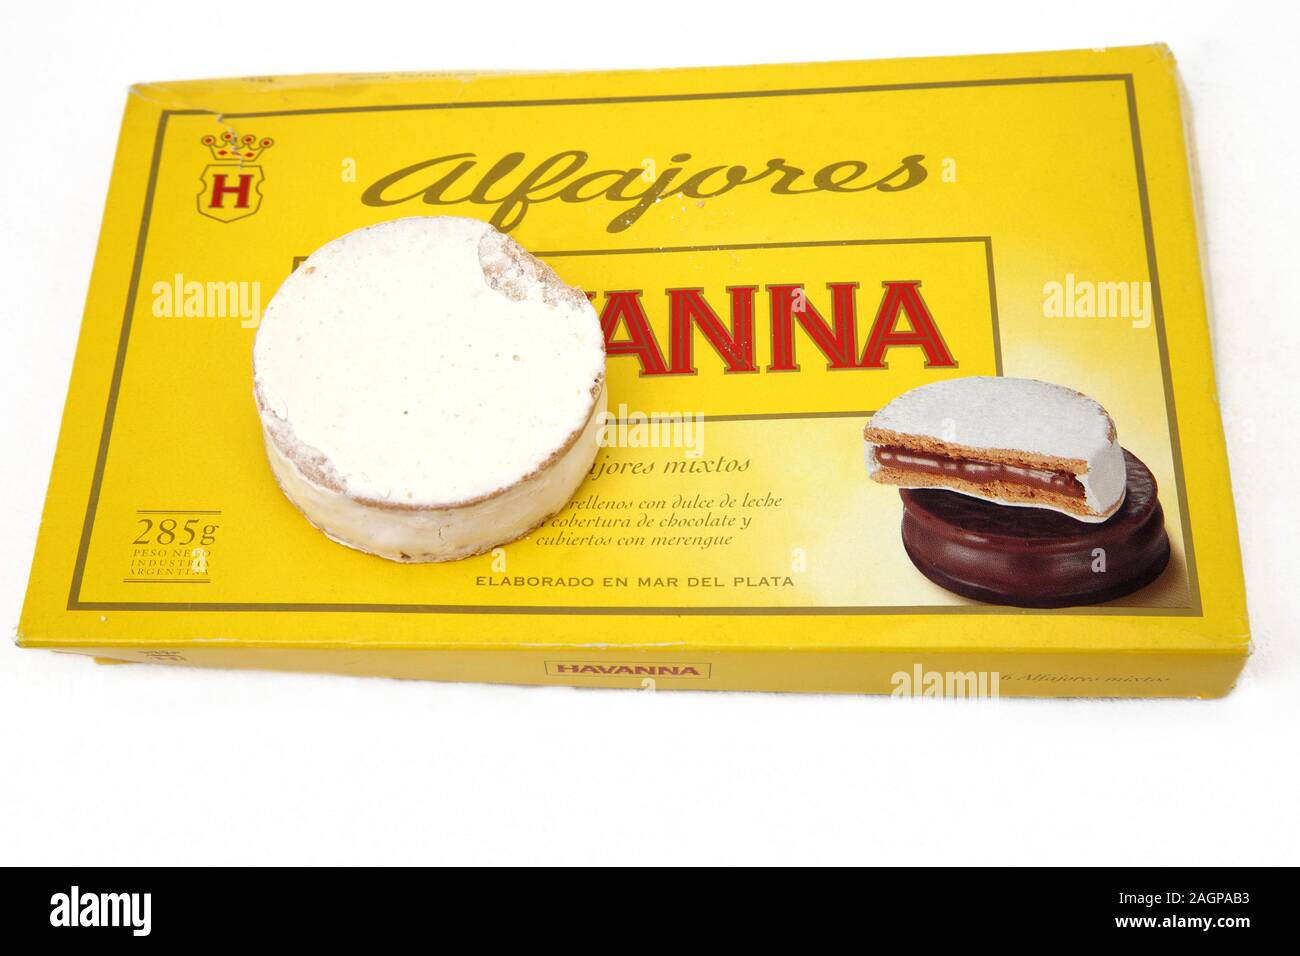 Havanna Alfajores Biscuits with Dulche De Leche from Argentina Stock Photo